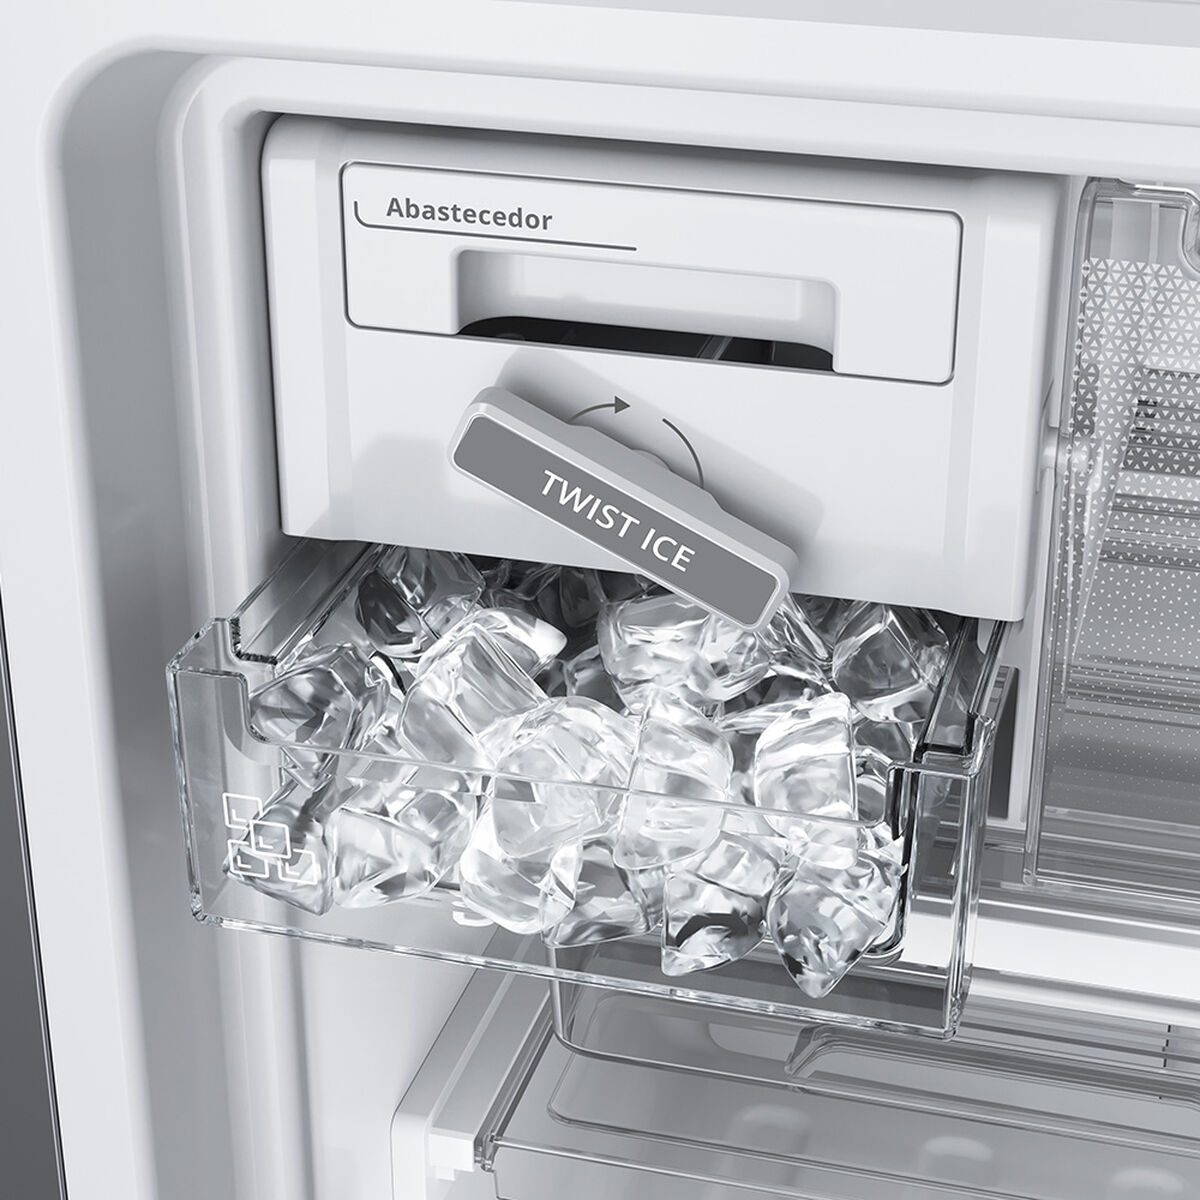 Refrigerador No Frost Whirlpool WRE57K1 443 lts.